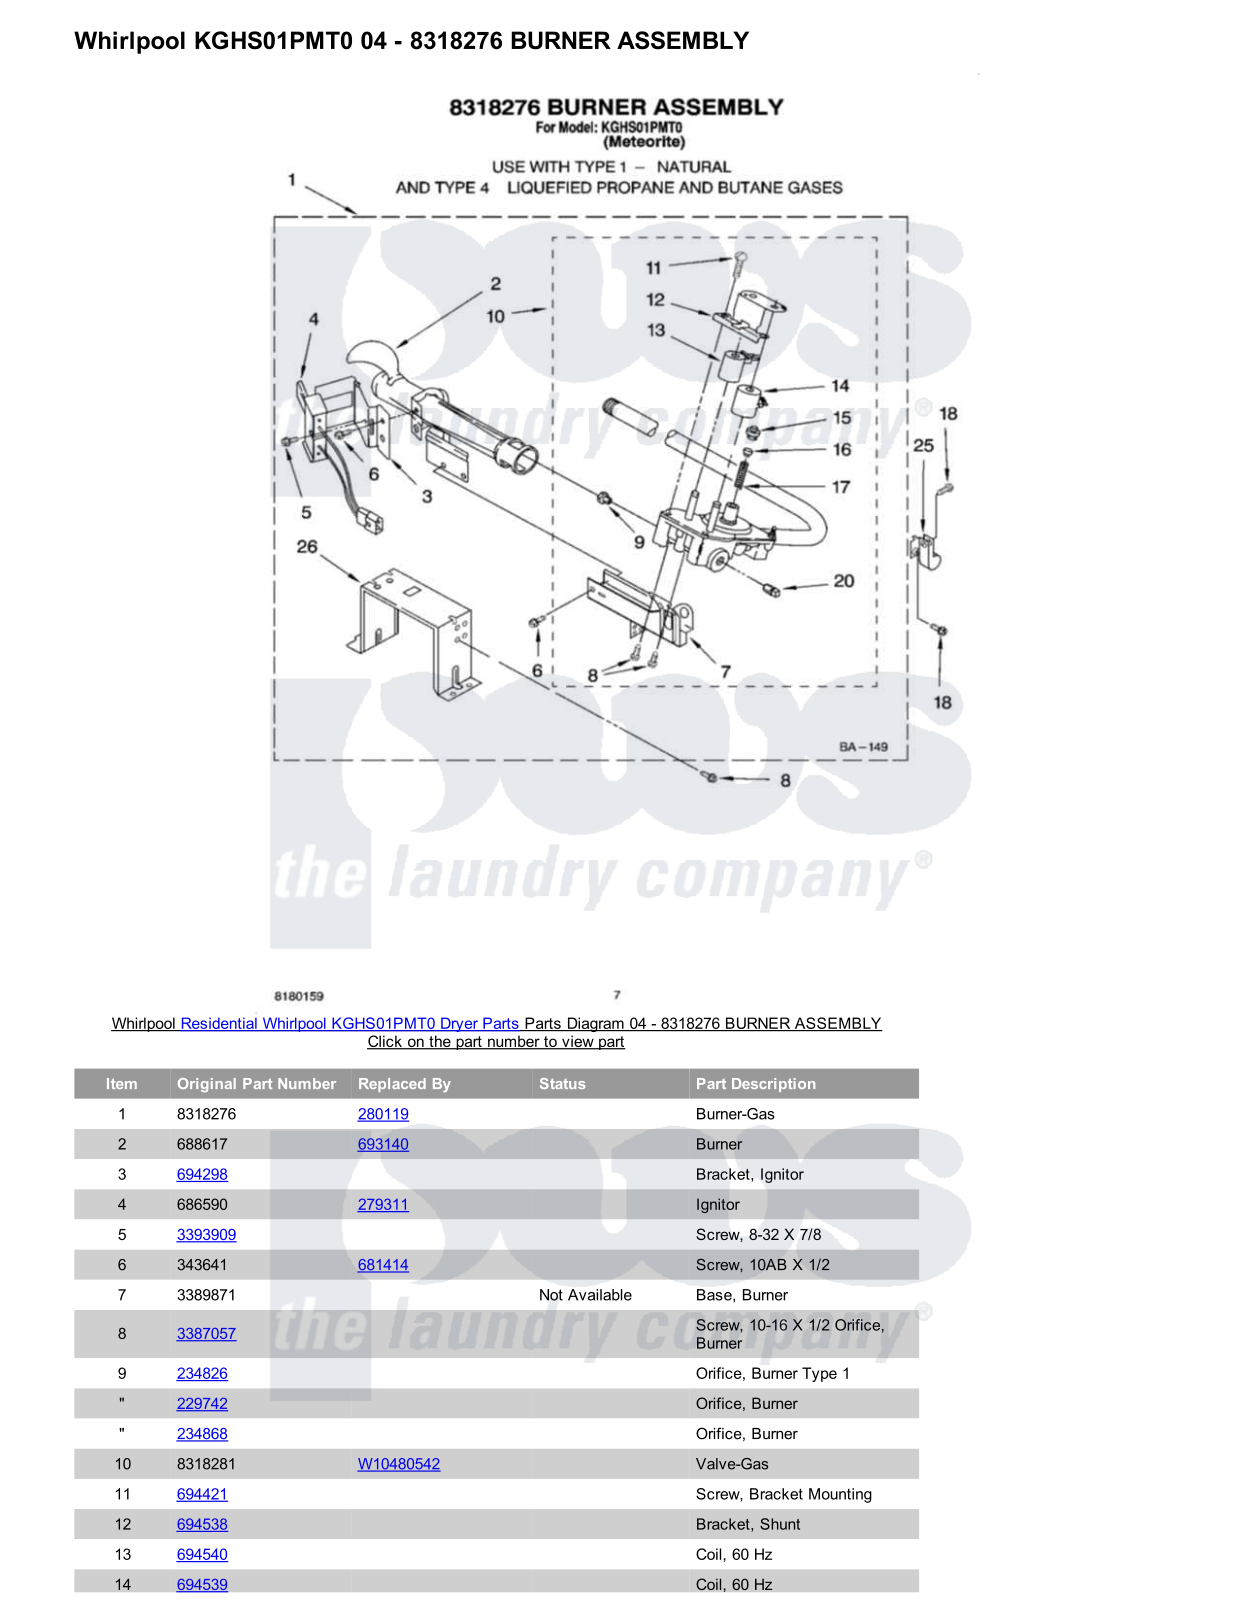 Whirlpool KGHS01PMT0 Parts Diagram